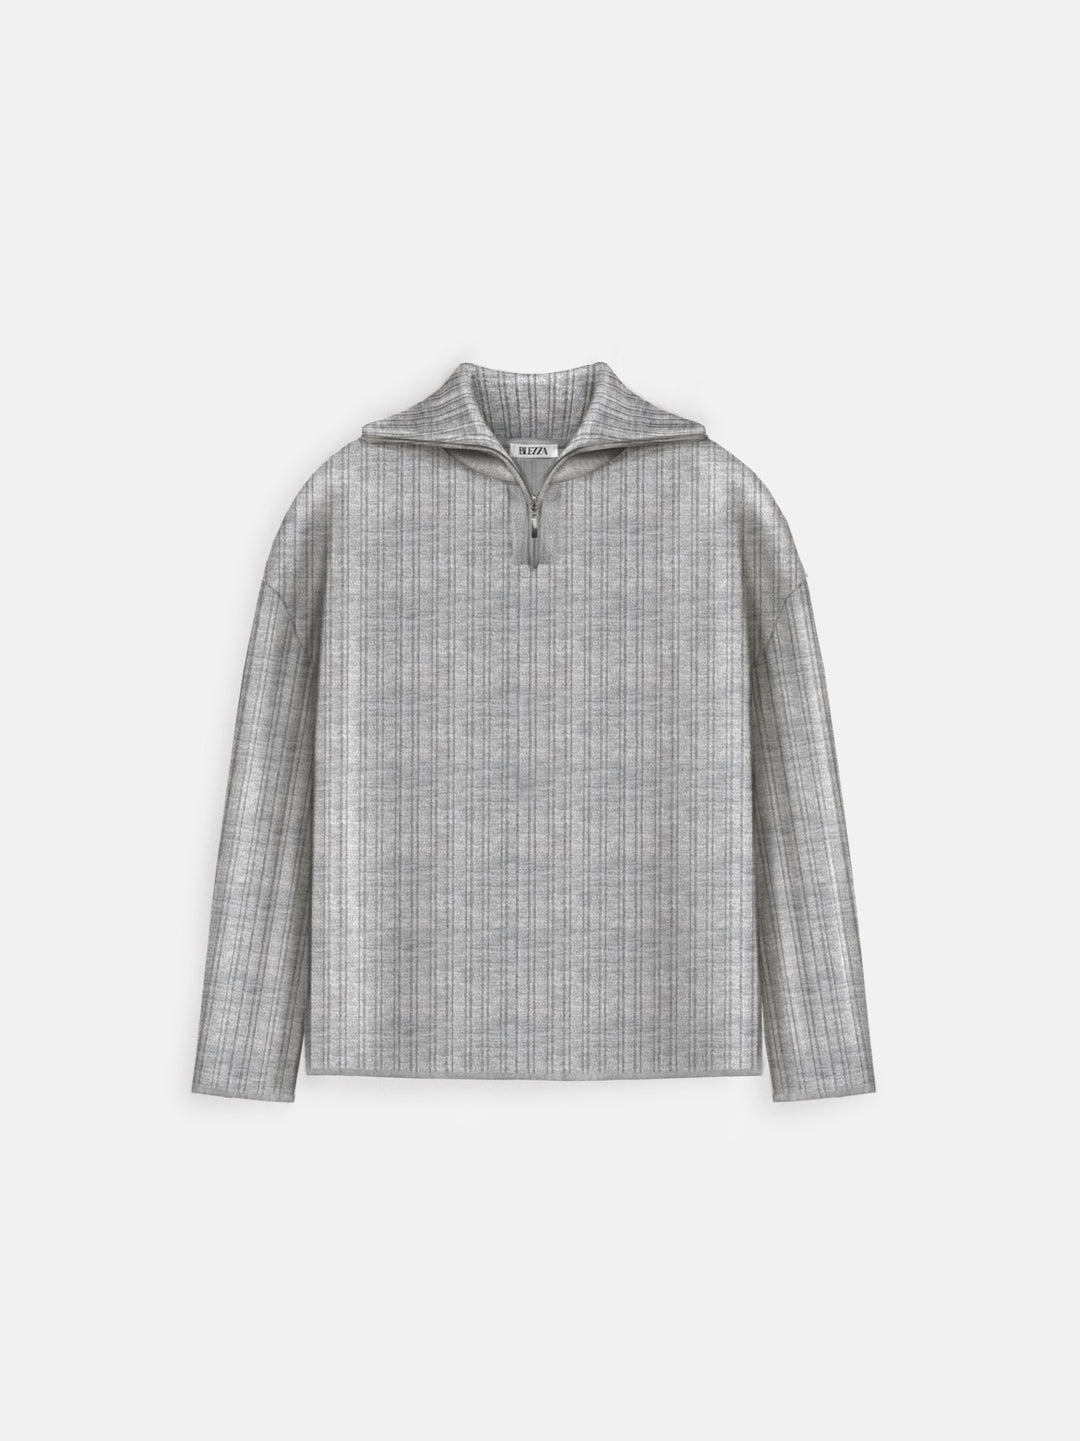 Oversize Knit Zipper Sweater - Grey